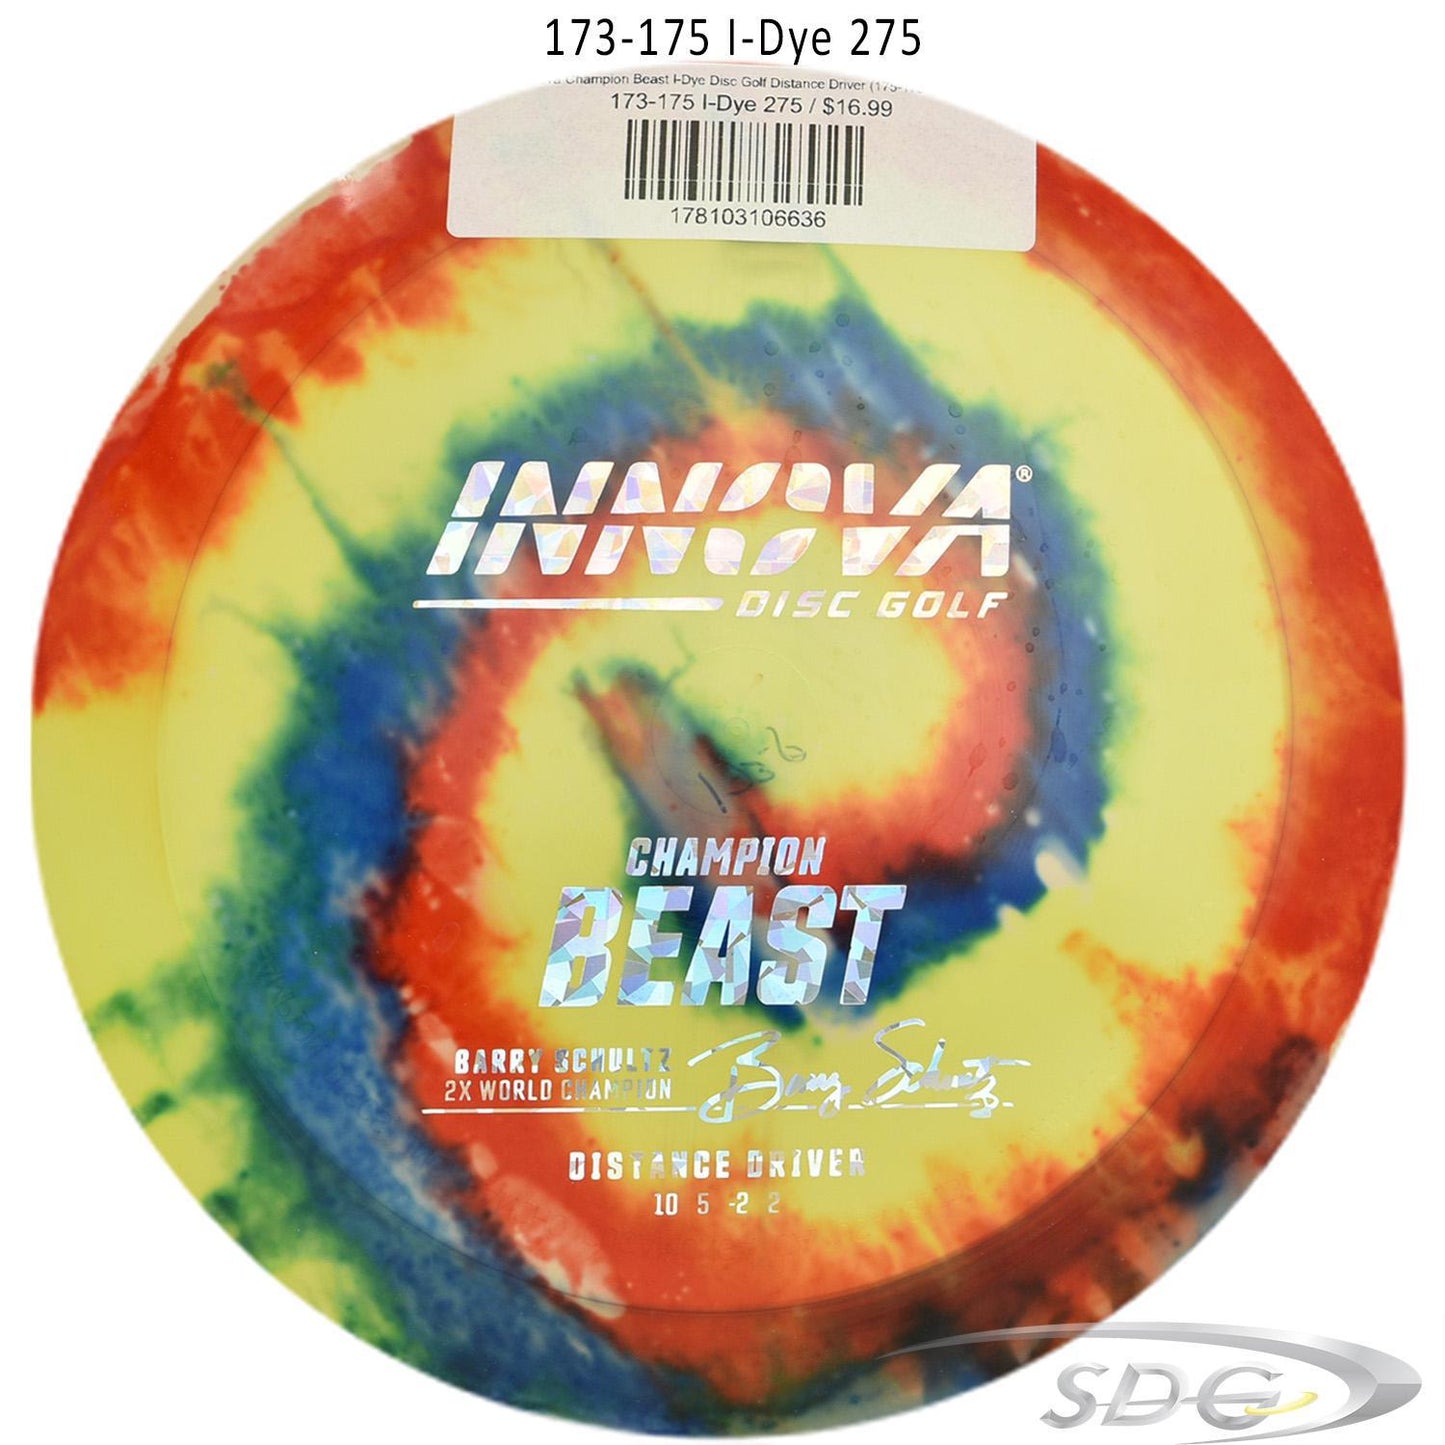 innova-champion-beast-i-dye-disc-golf-distance-driver 173-175 I-Dye 275